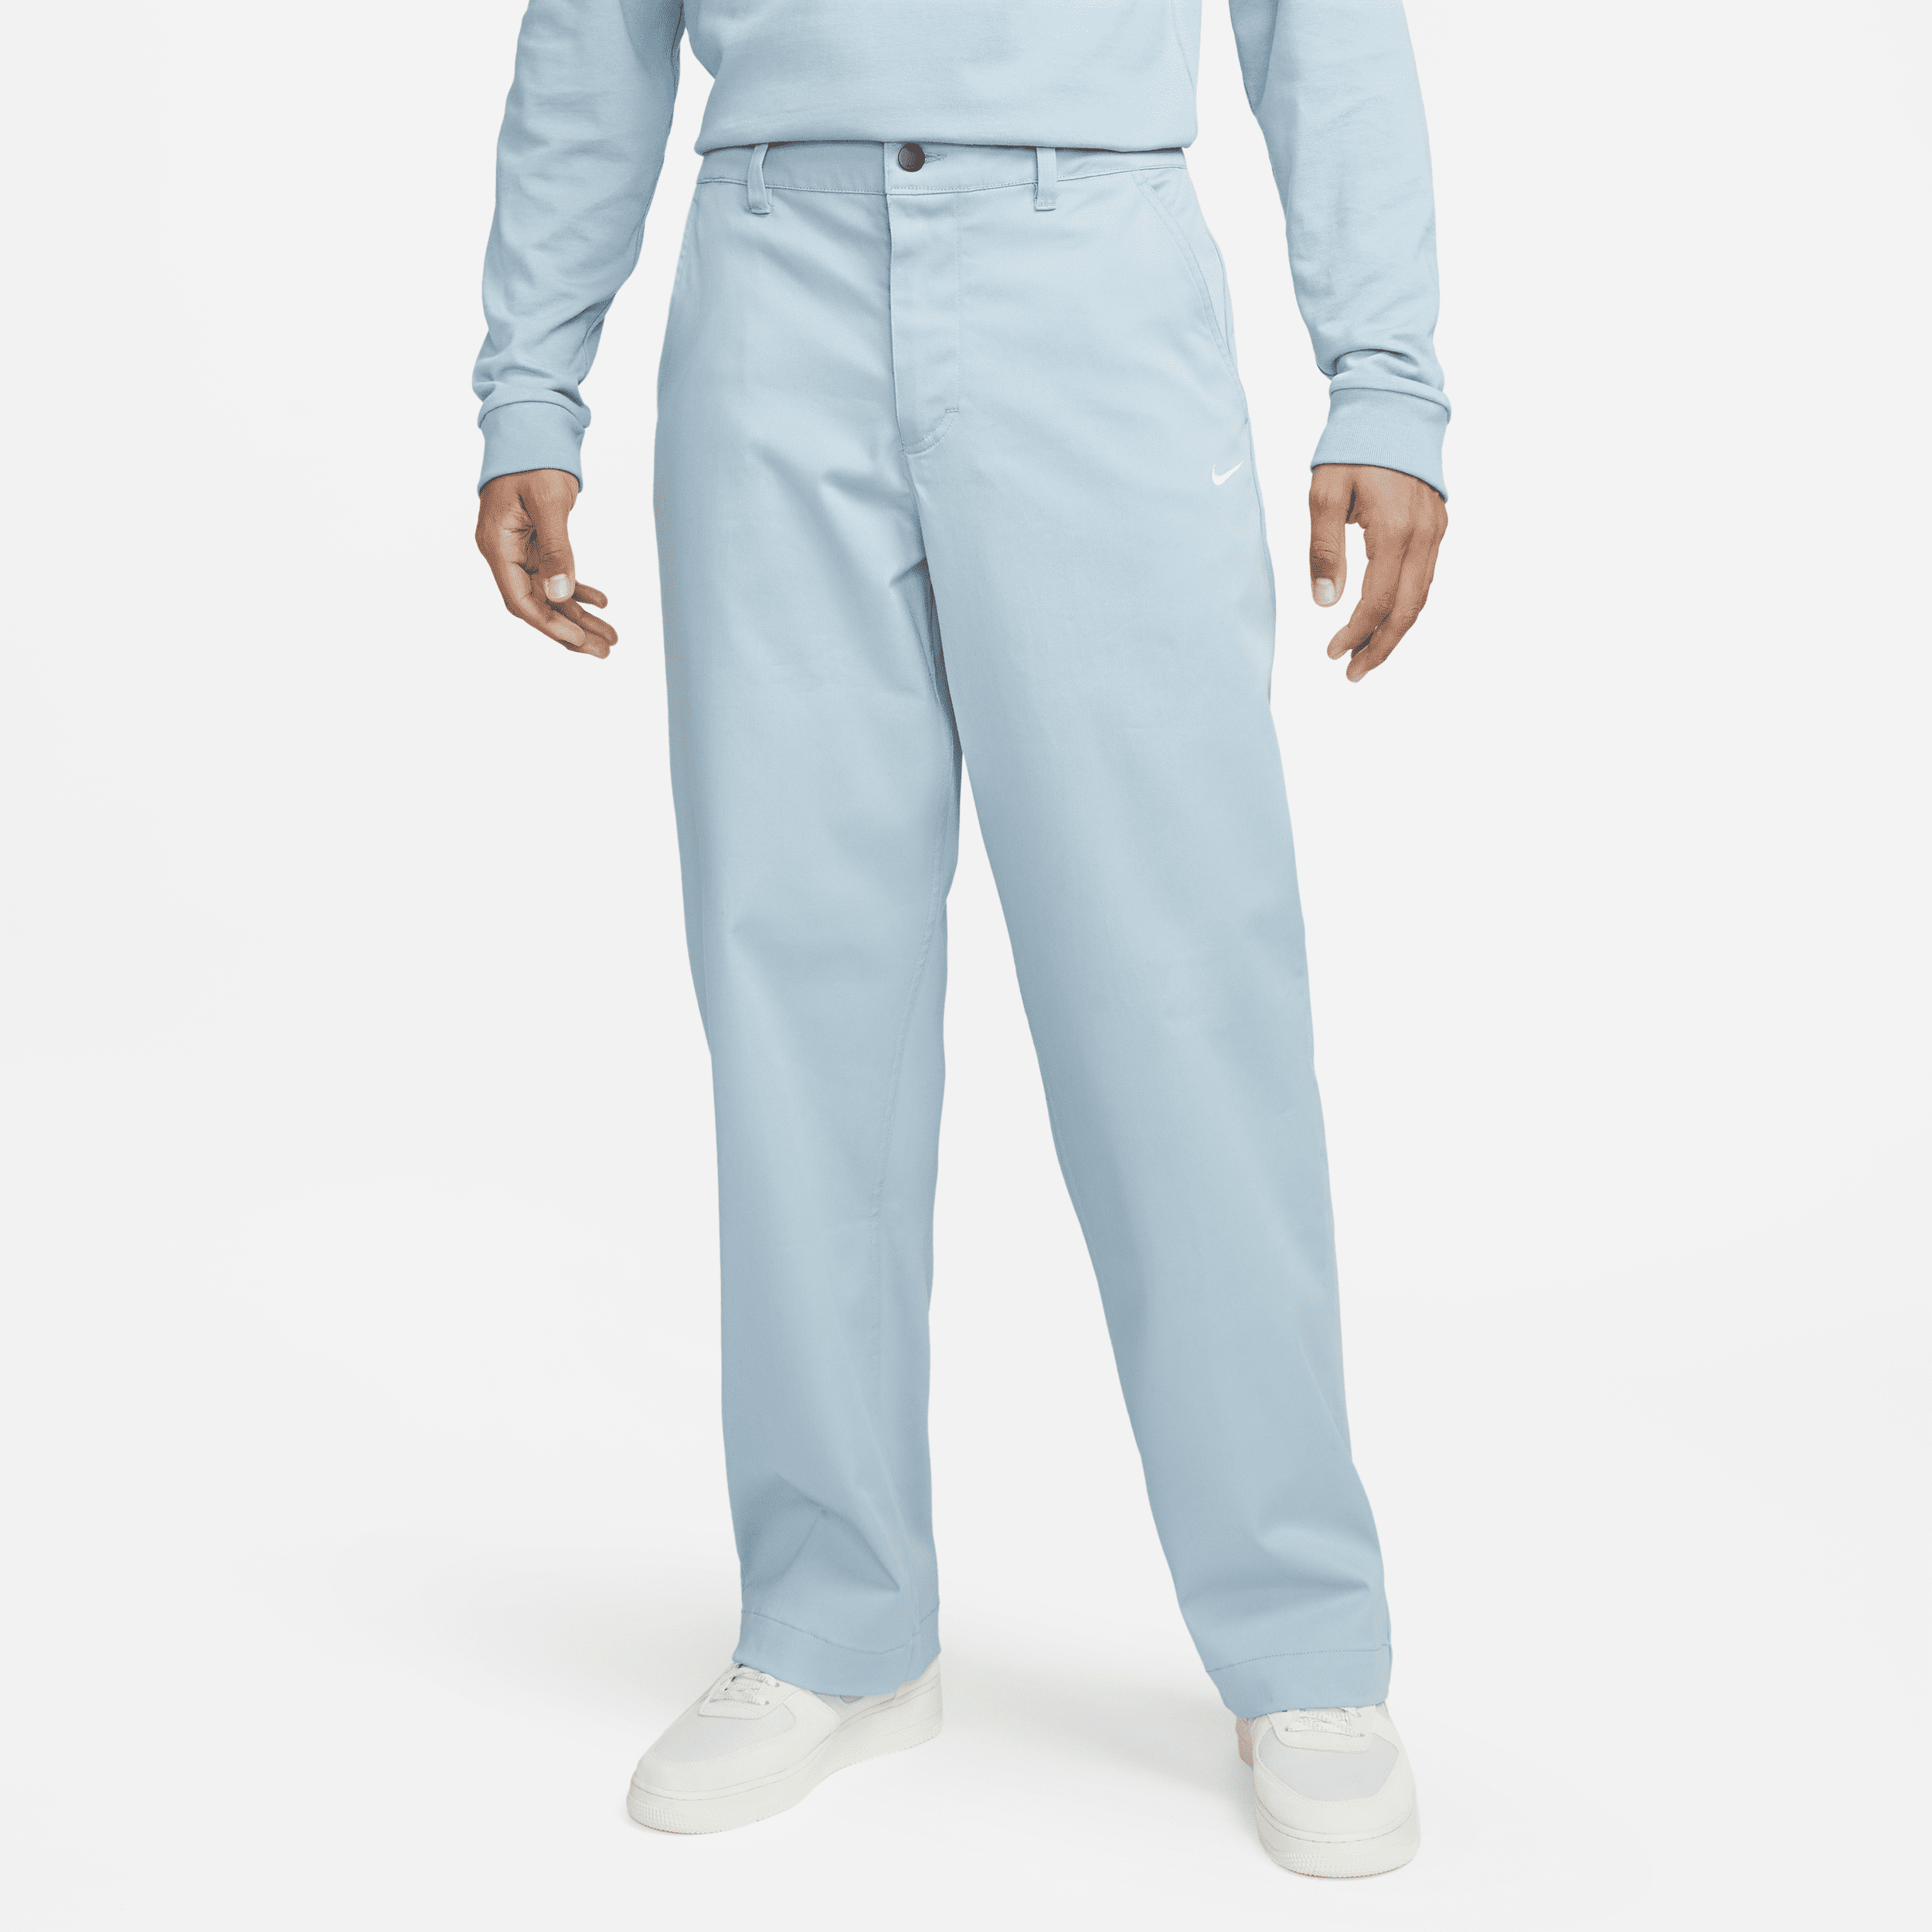 Pantaloni chino in cotone non foderati Nike Life – Uomo - Blu